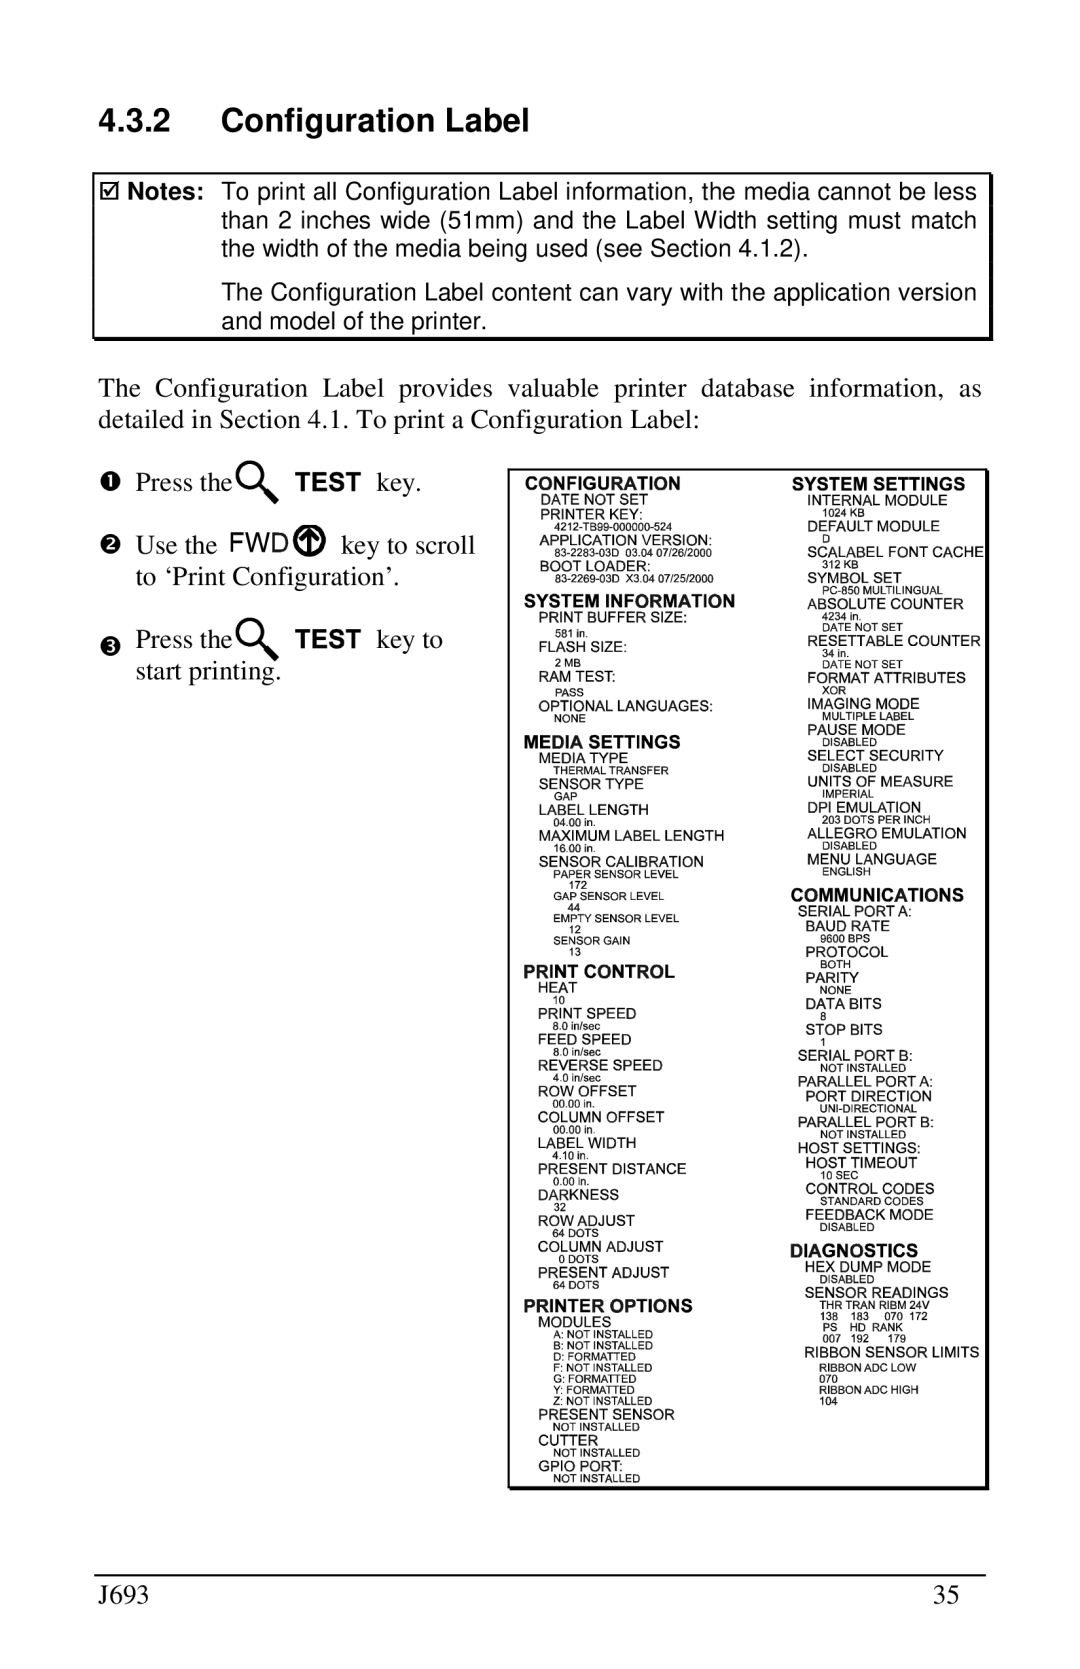 Pitney Bowes J693 manual Configuration Label 